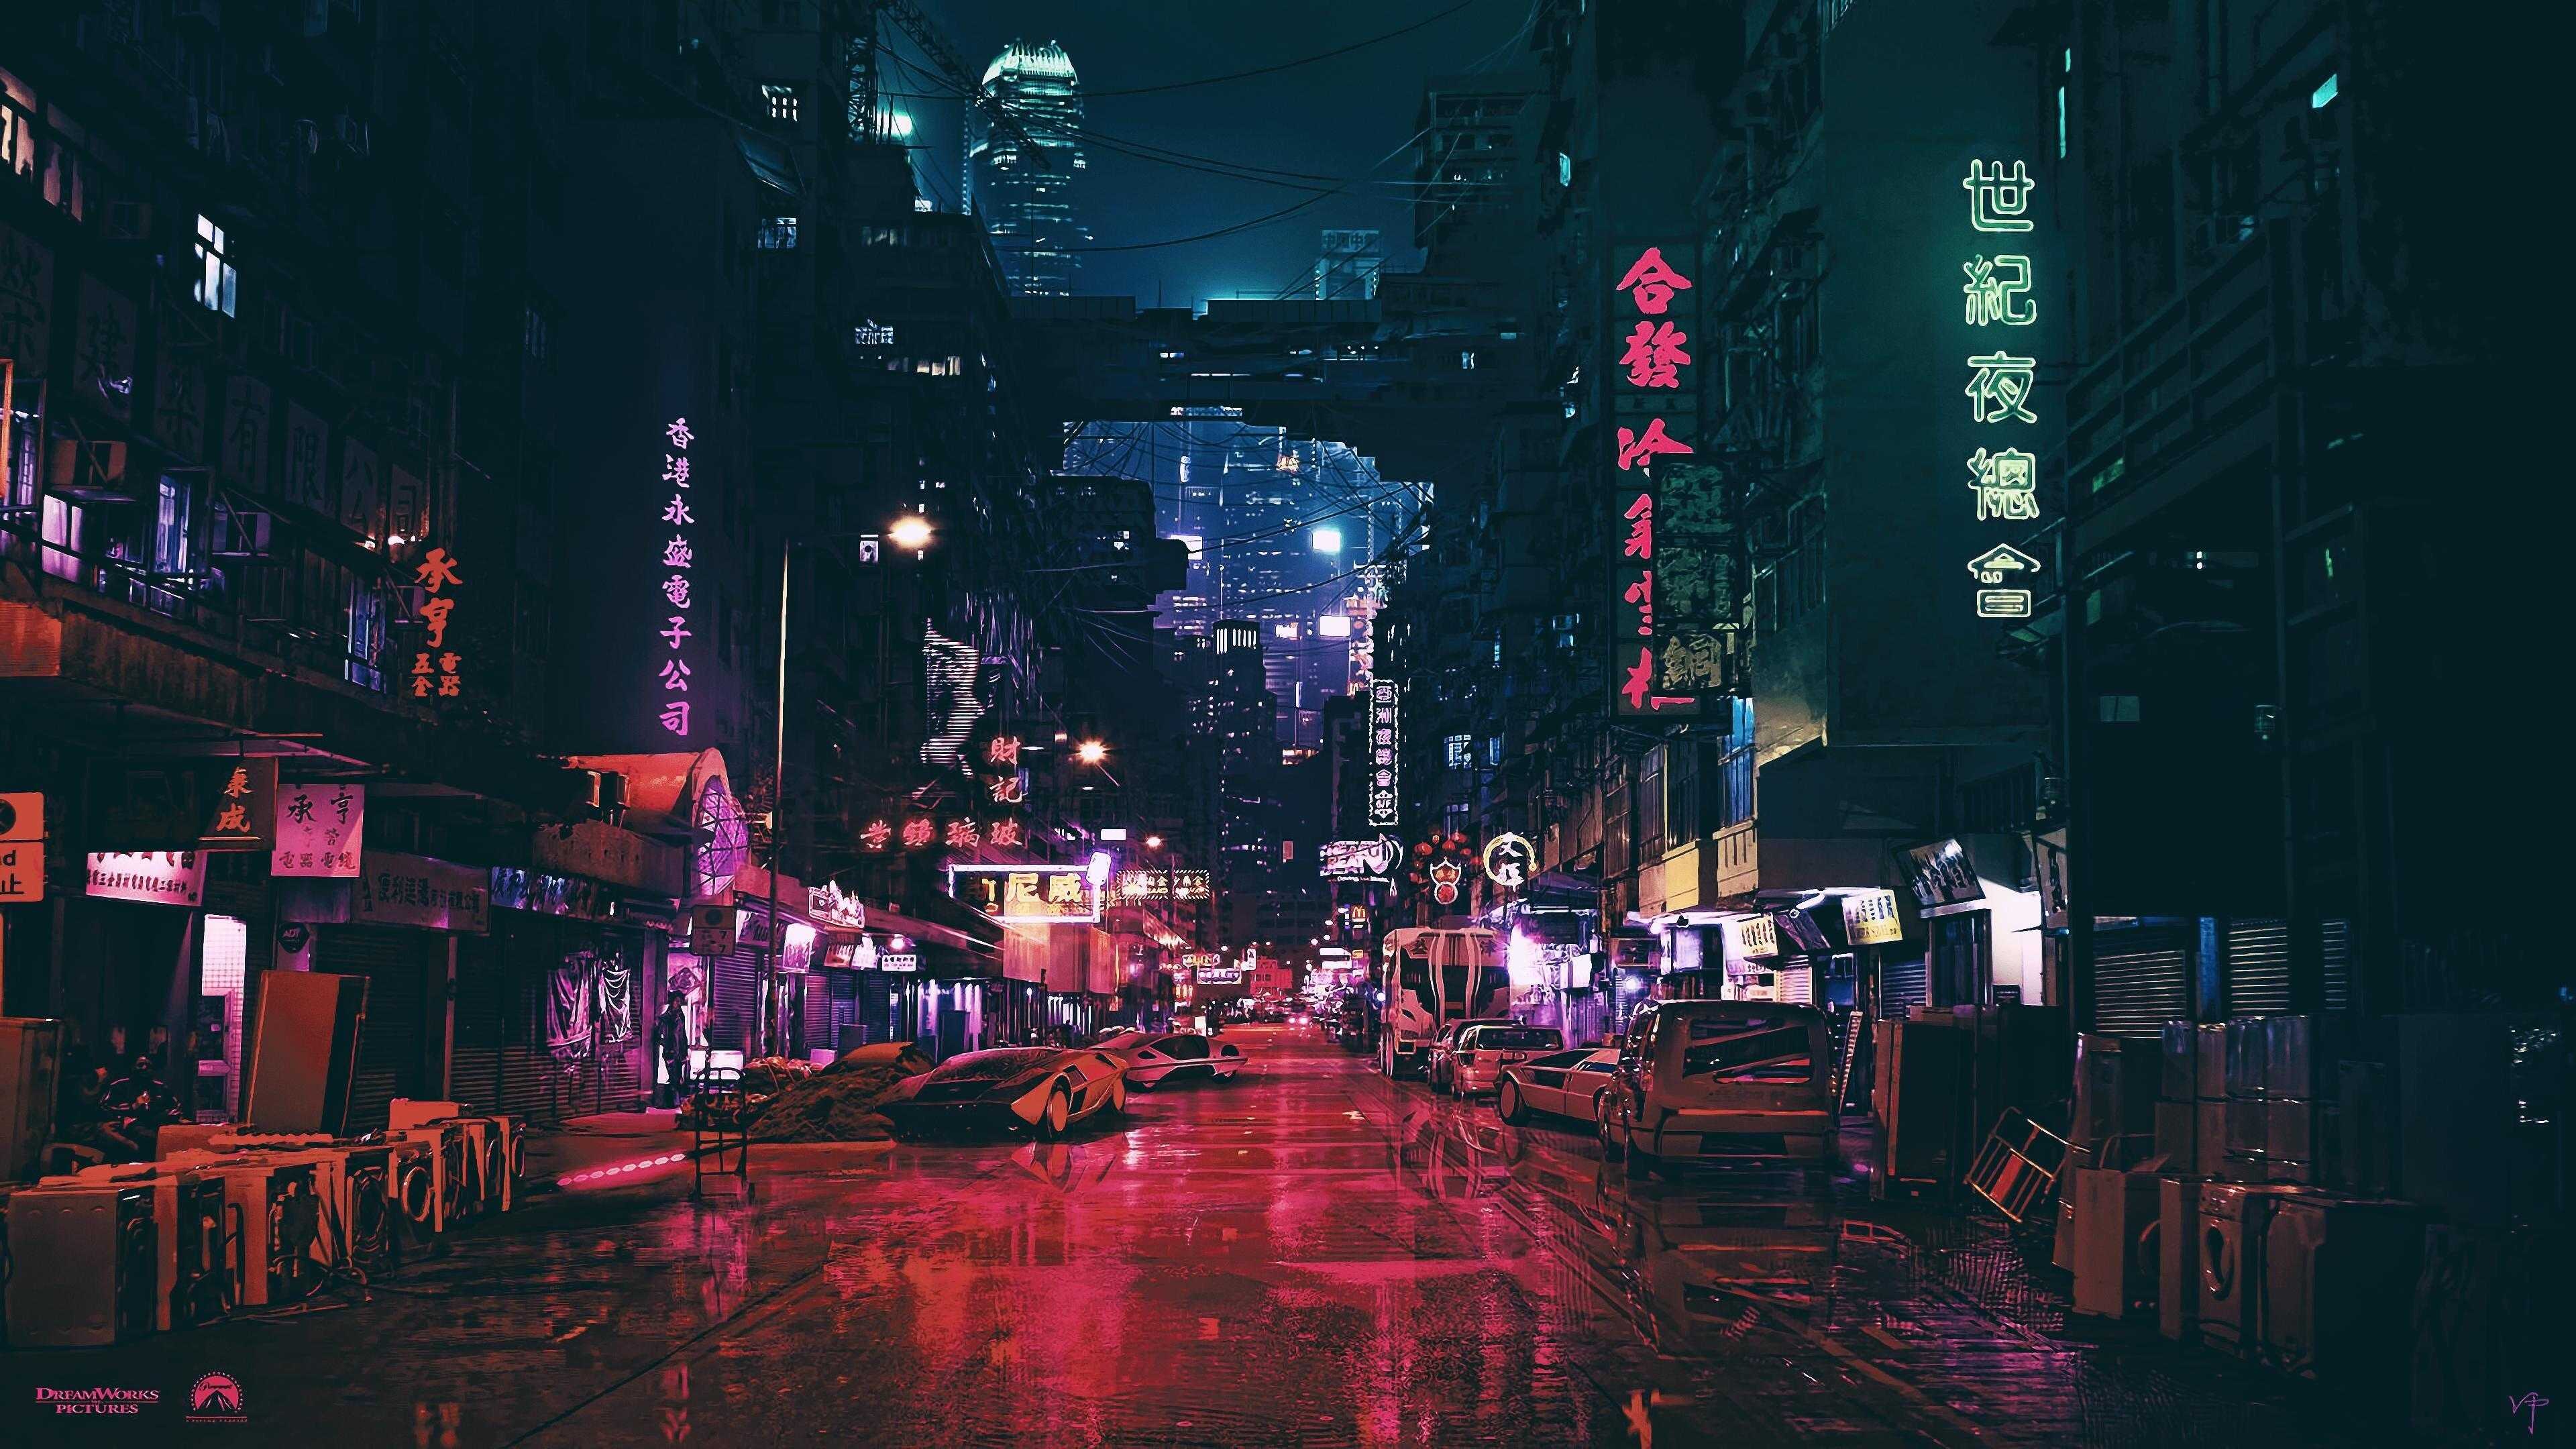 A neon-lit street at night in a city - Cyberpunk, lo fi